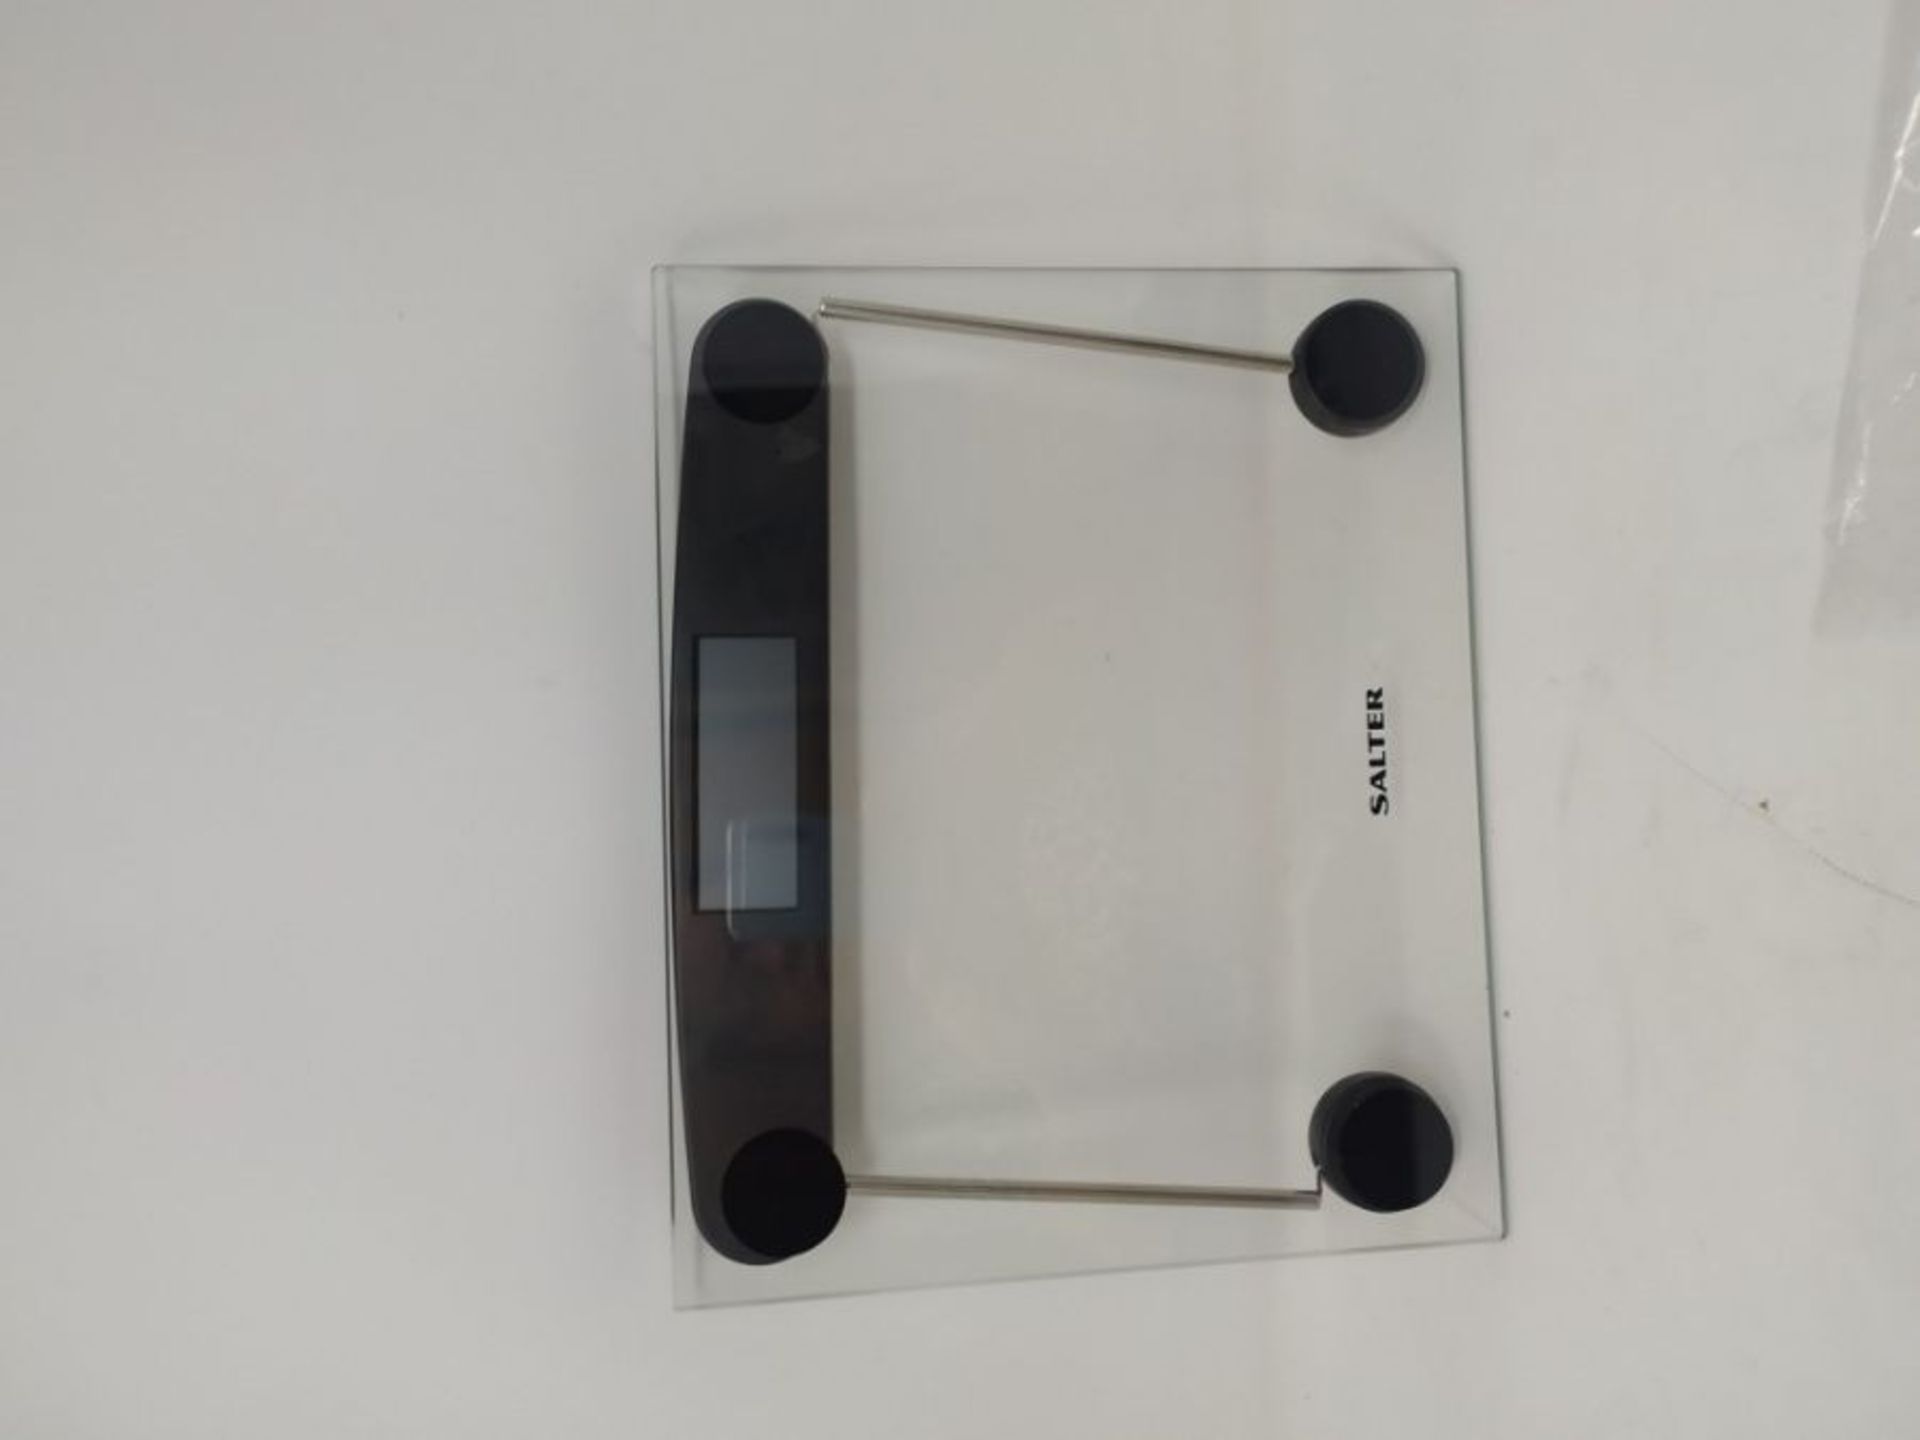 Salter Compact Digital Bathroom Scales - Image 2 of 2